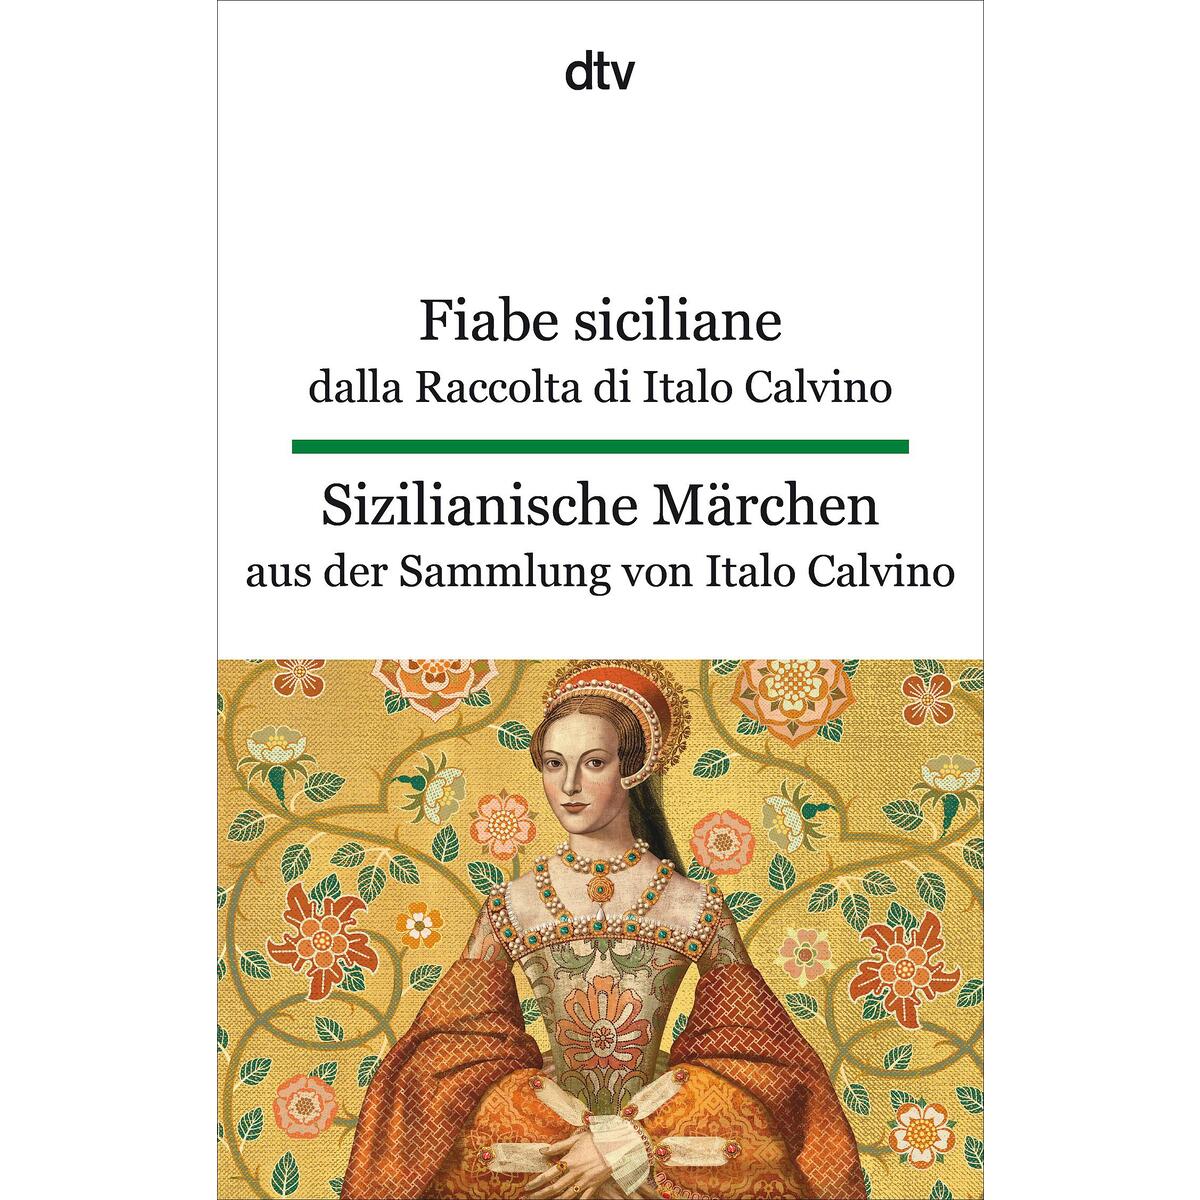 Fiabe siciliane dalla Raccolta di Italo Calvino. Sizilianische Märchen aus der S... von dtv Verlagsgesellschaft